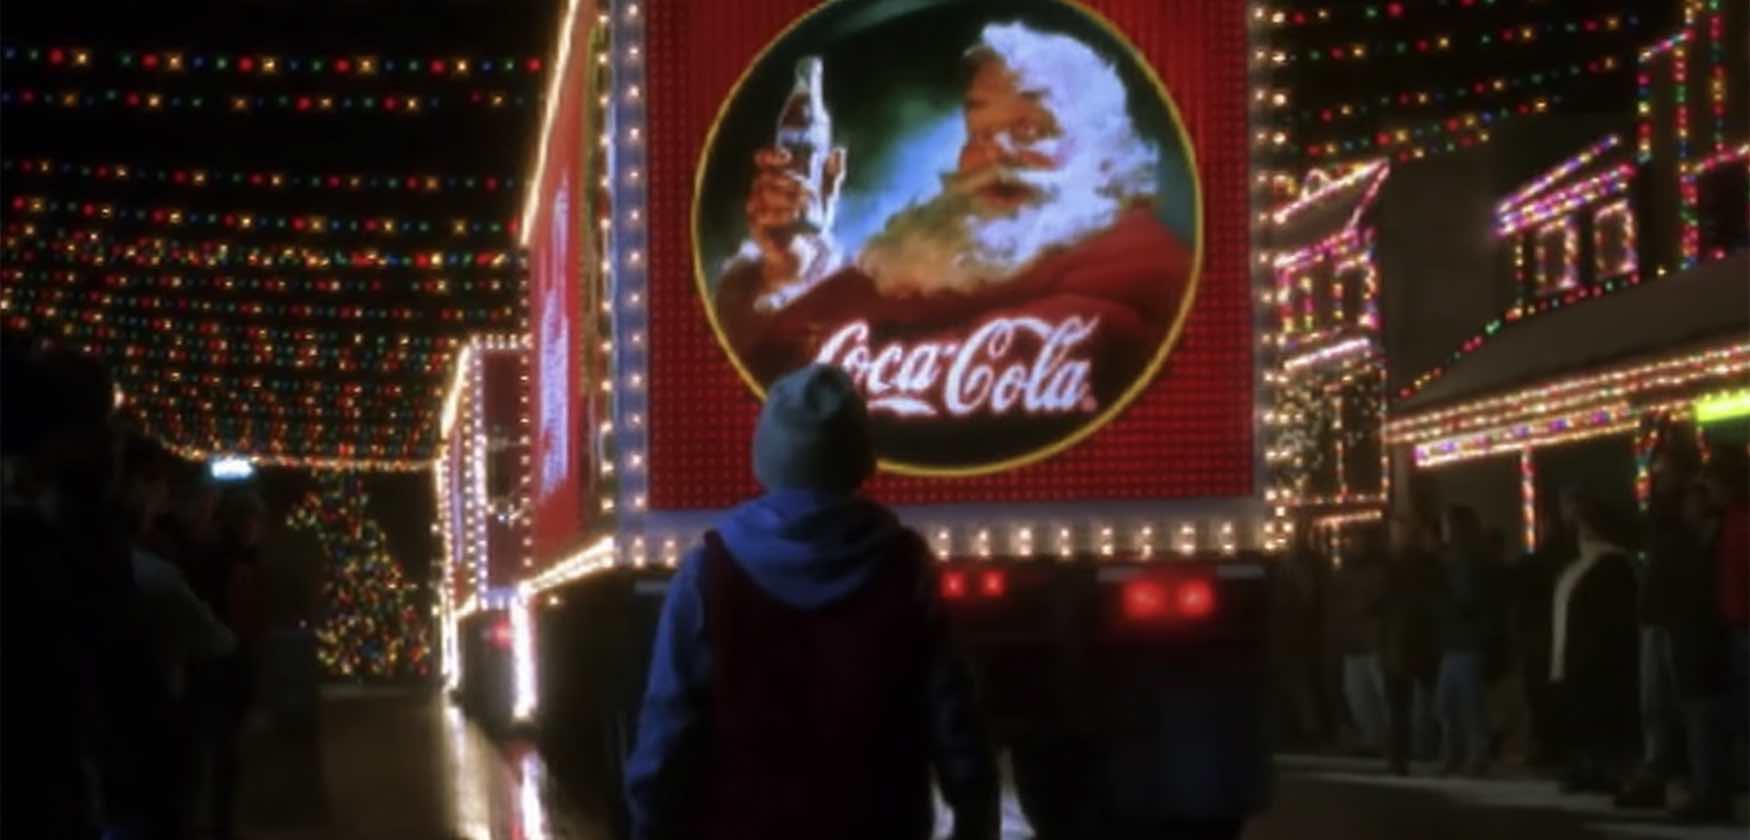 Coca-Cola Christmas Truck Tour 2021 